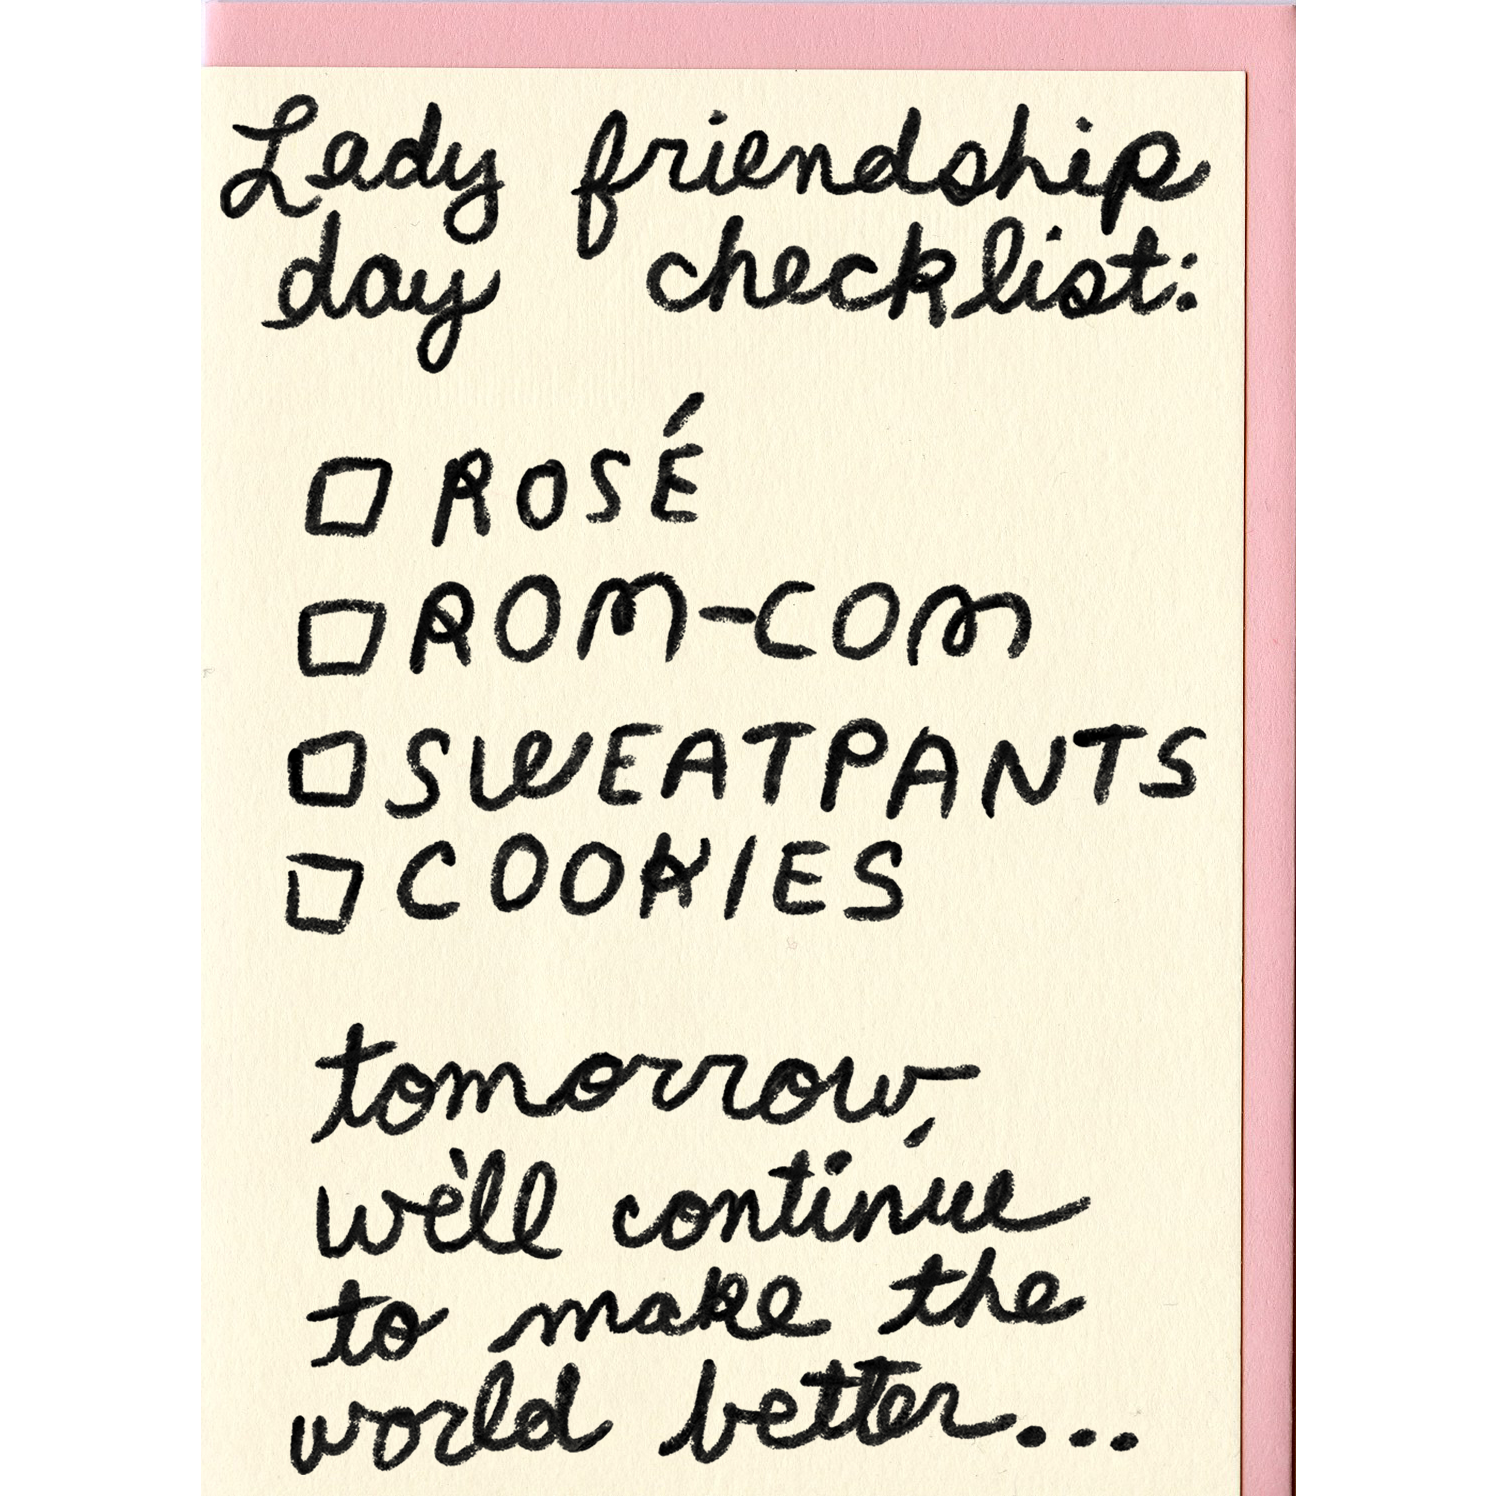 Card - "Lady friendship day"